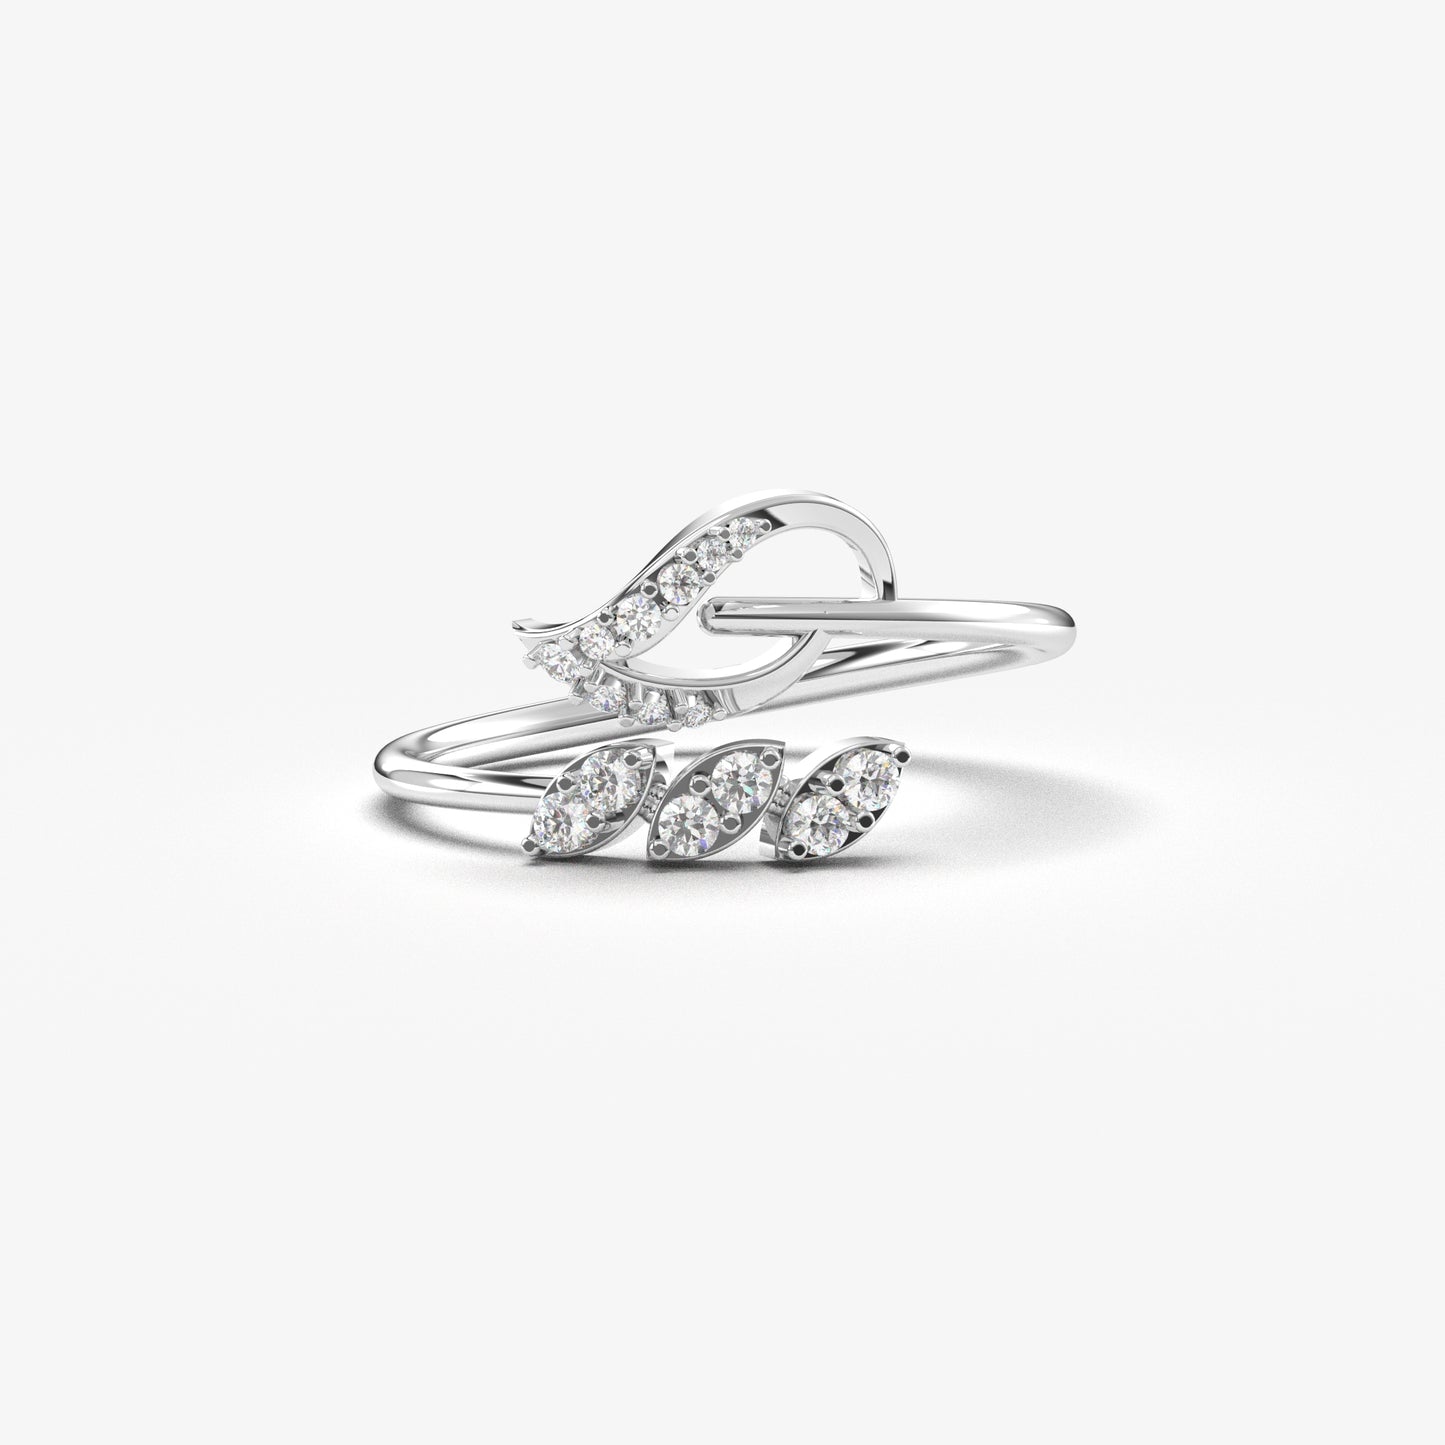 10K Gold Leaf Ivy Diamond Ring - LR124